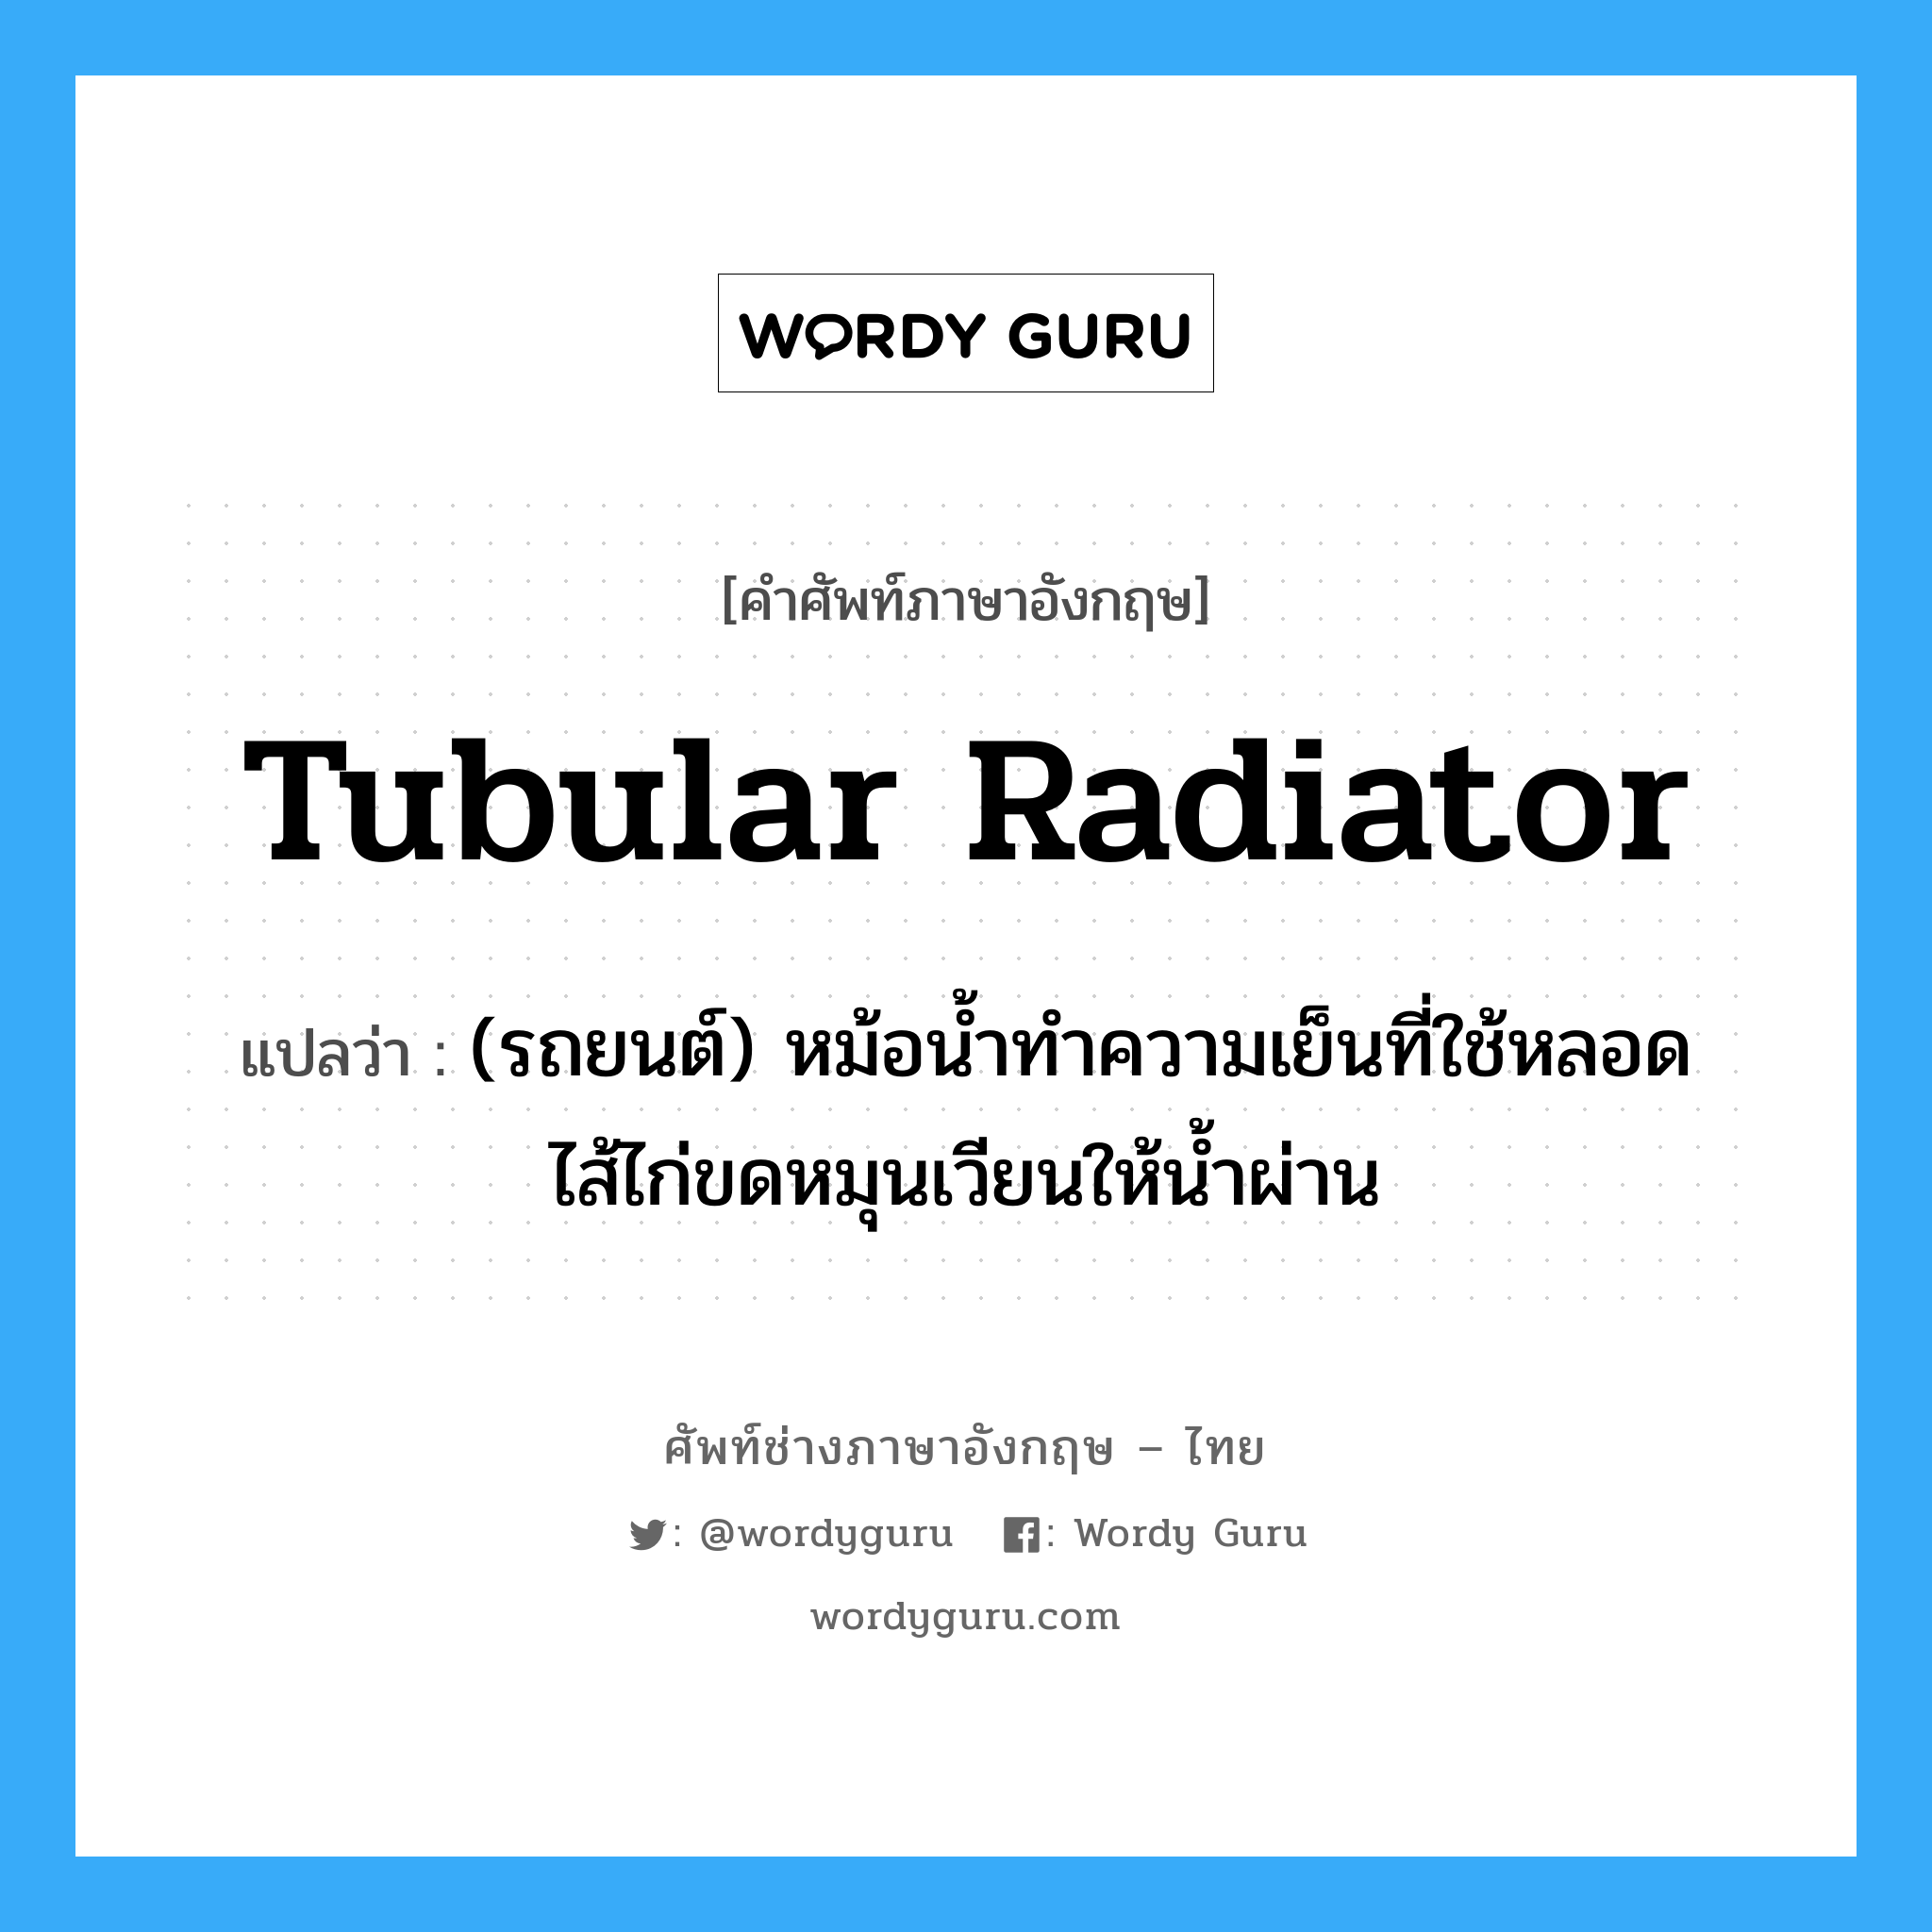 tubular radiator แปลว่า?, คำศัพท์ช่างภาษาอังกฤษ - ไทย tubular radiator คำศัพท์ภาษาอังกฤษ tubular radiator แปลว่า (รถยนต์) หม้อน้ำทำความเย็นที่ใช้หลอดไส้ไก่ขดหมุนเวียนให้น้ำผ่าน